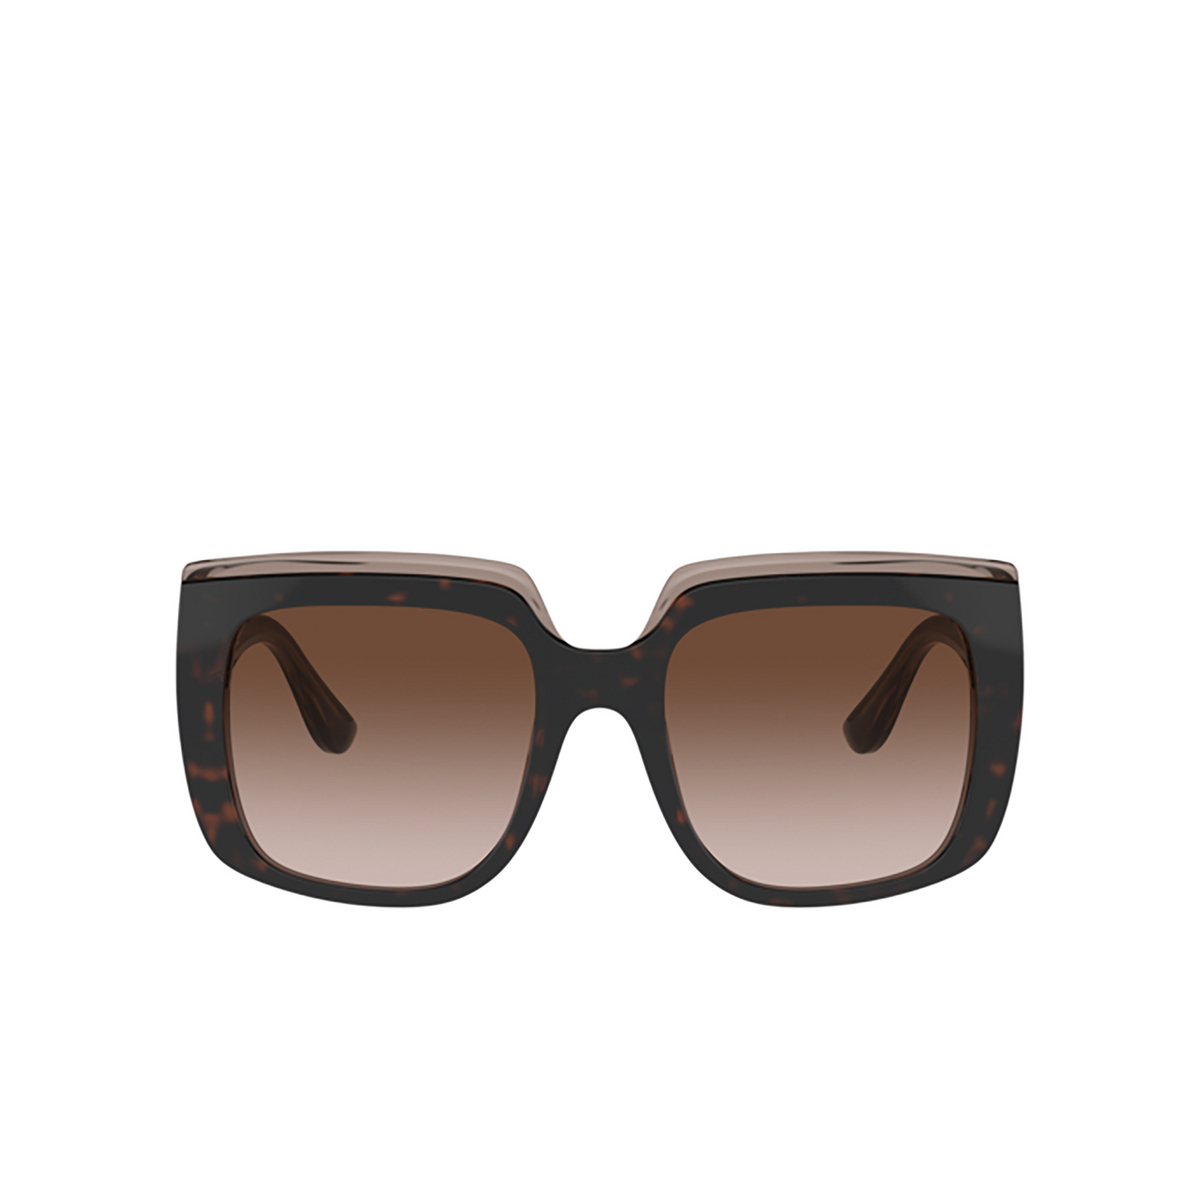 Dolce & Gabbana DG4414 Sunglasses 502/13 Havana on transparent brown - front view